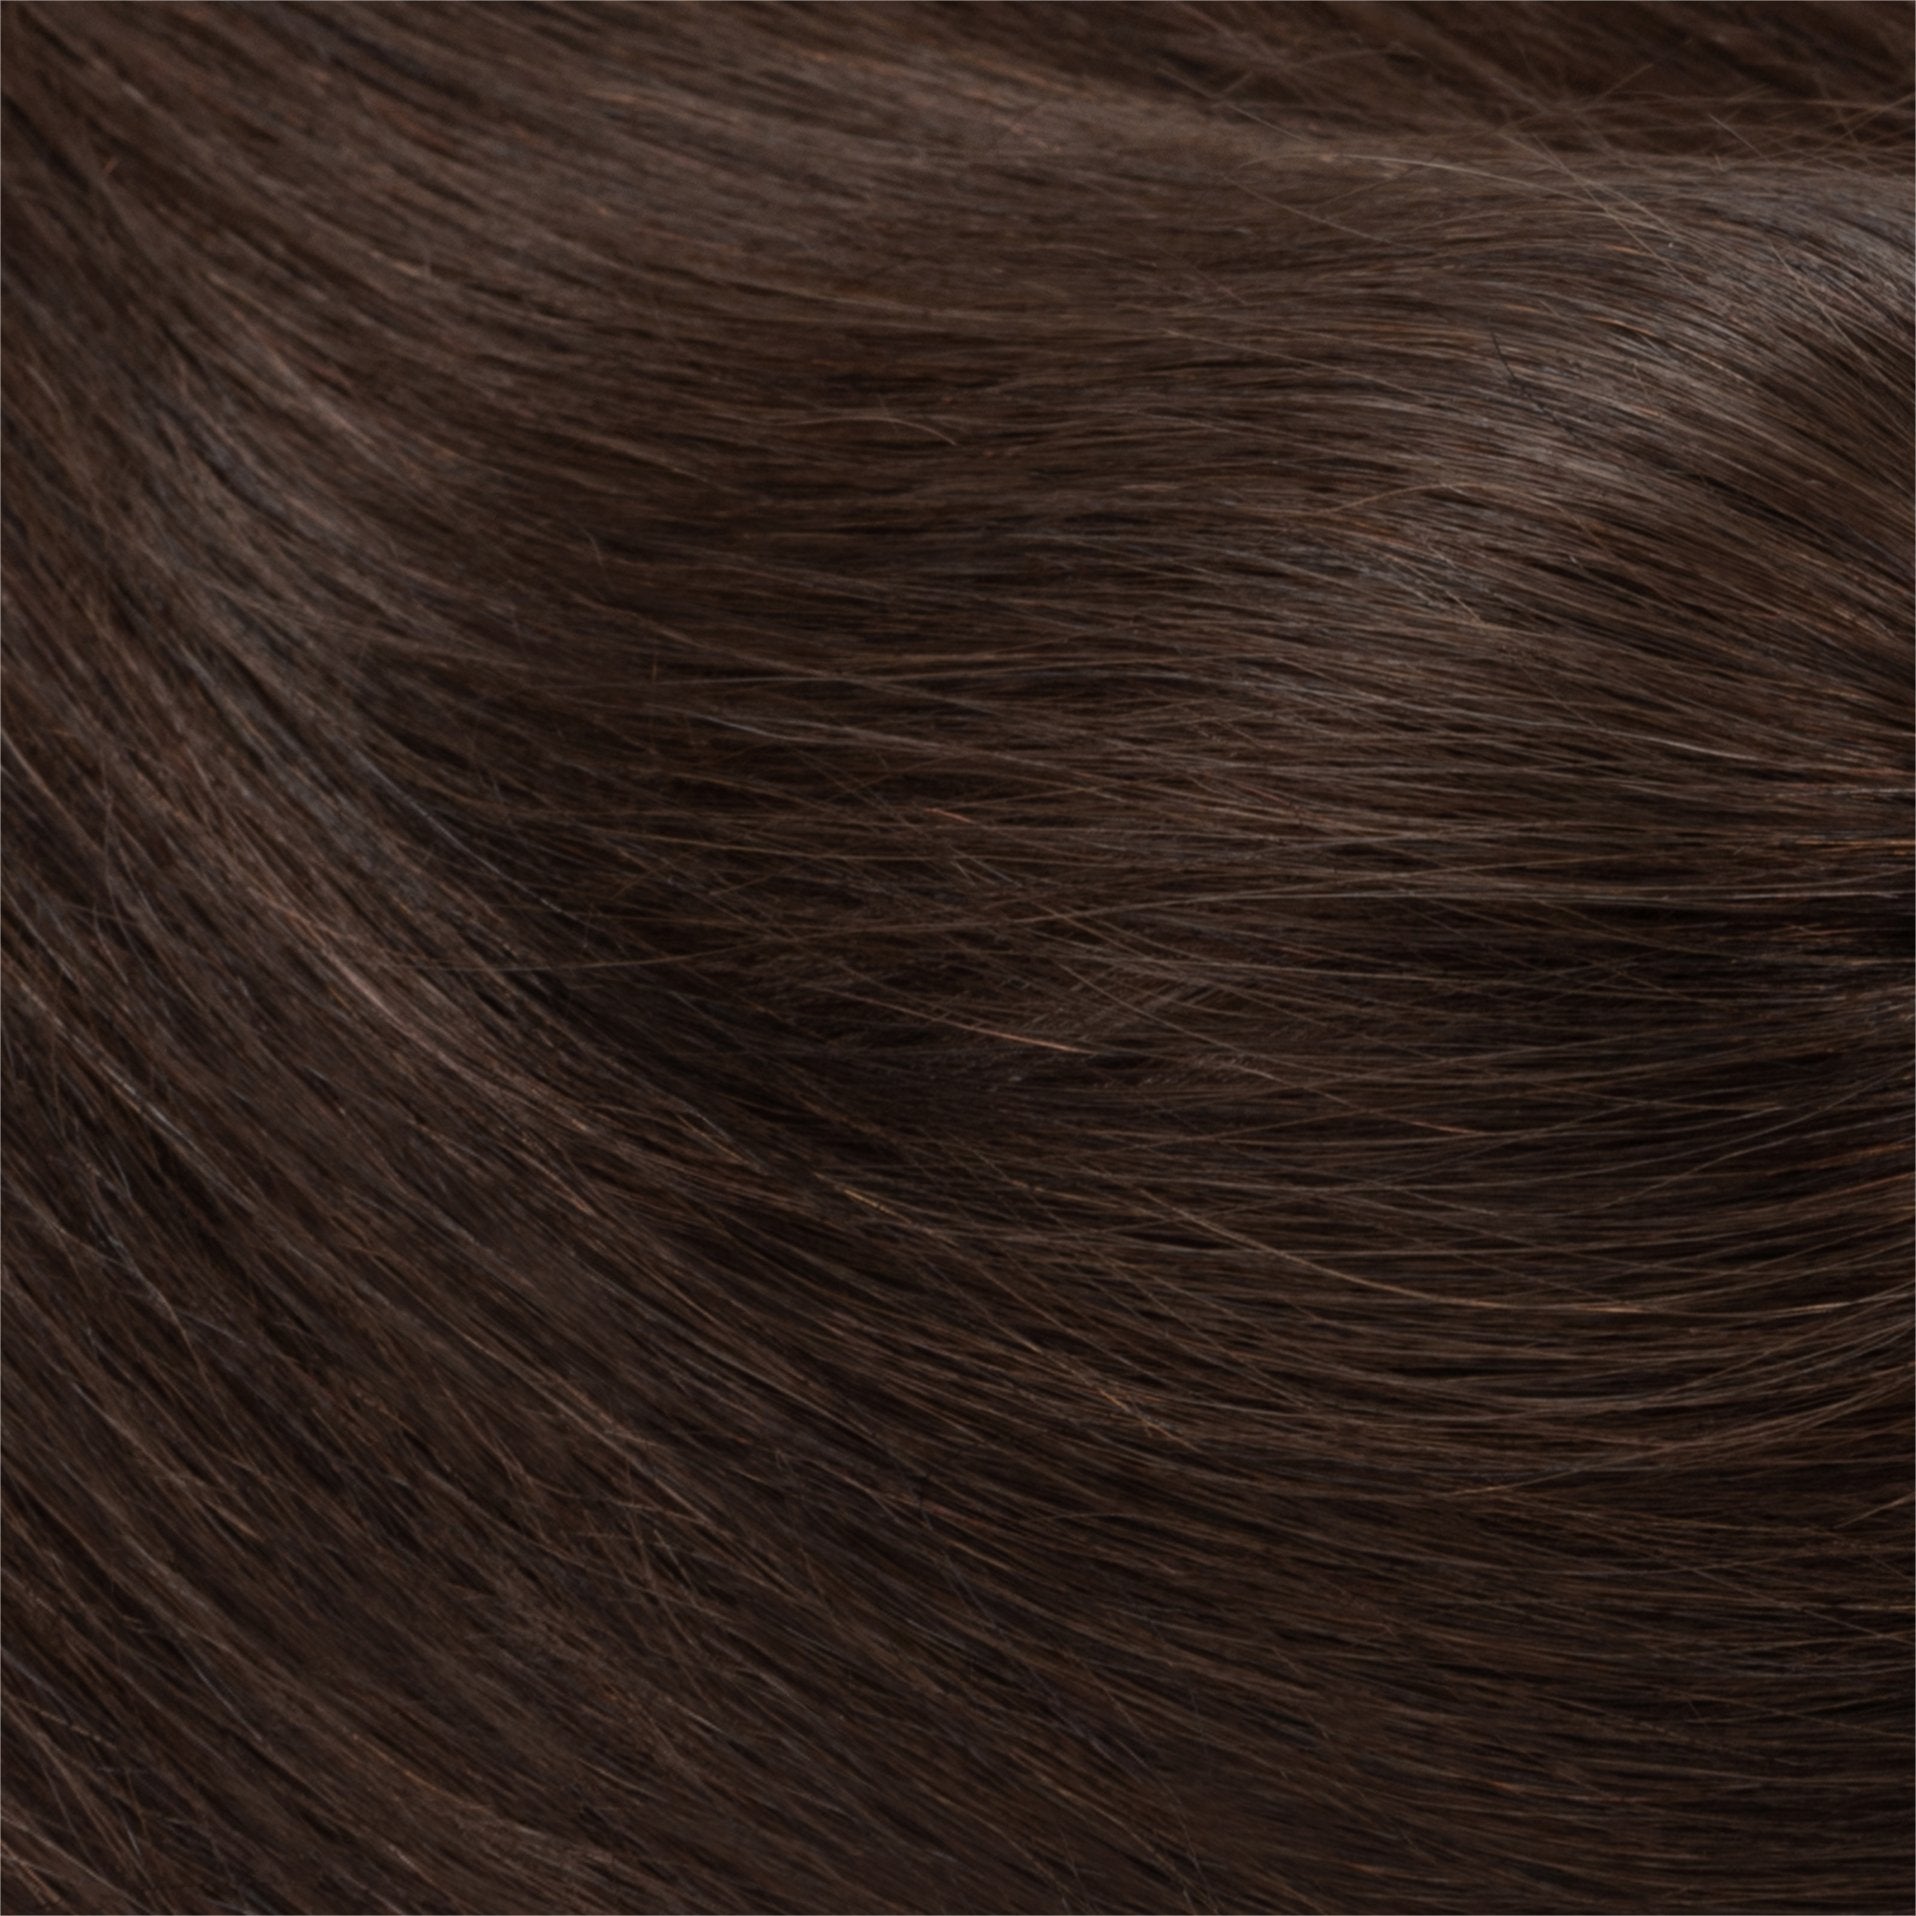 SEGOHAIR Clip In Hair Extensions Real Human Hair Light Weight Dark Brown segohair.com